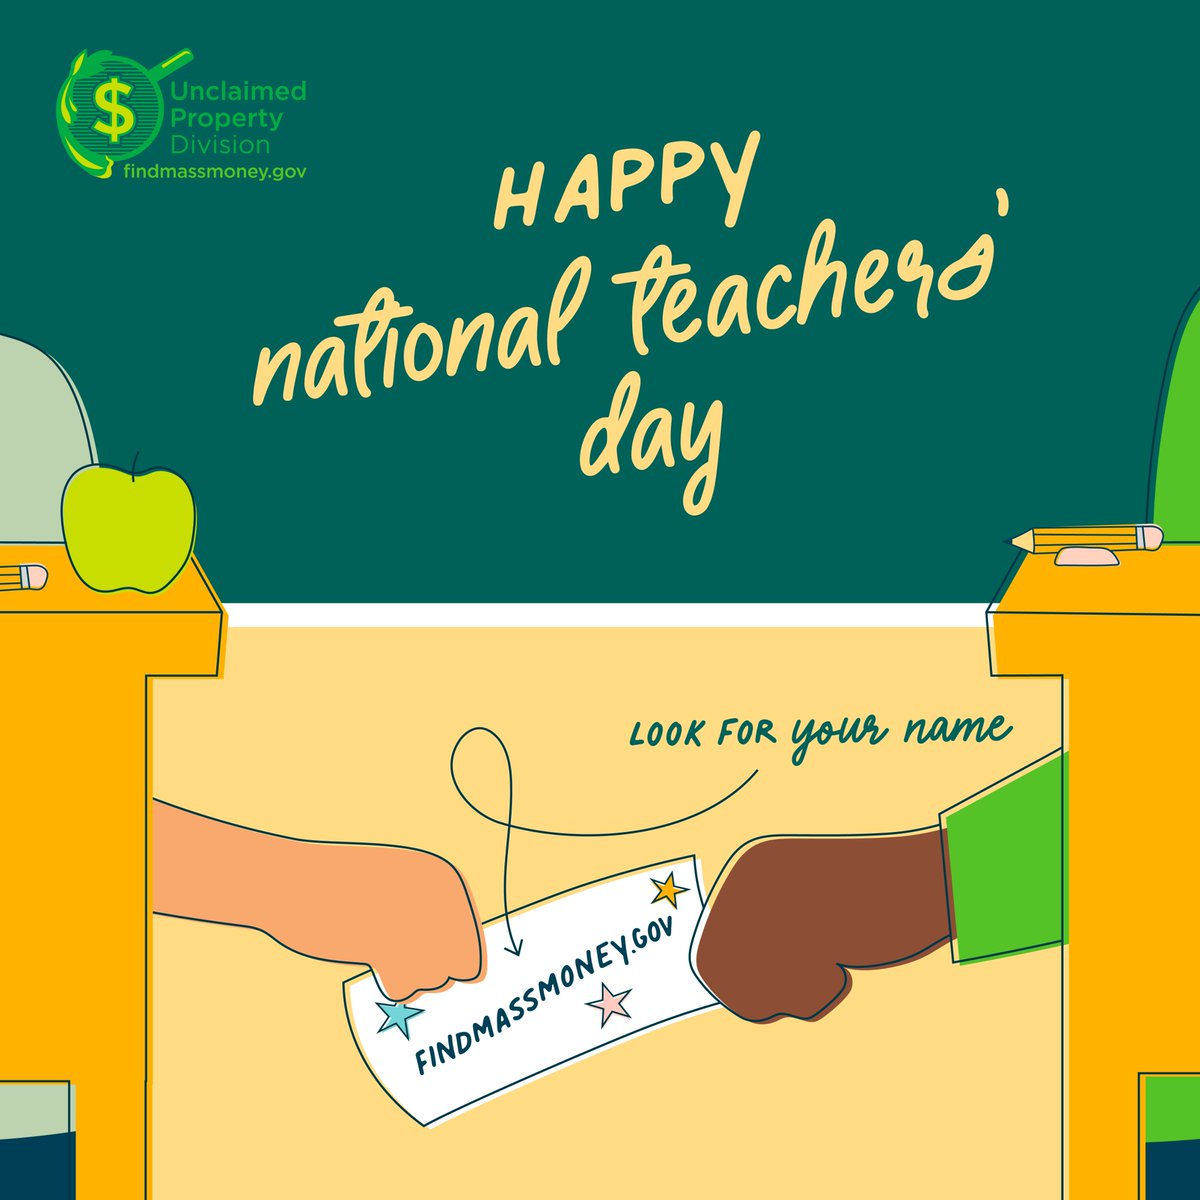 Psst...teachers! The secret's out! Find your misplaced cash at findmassmoney.gov. Happy National Teacher Day!